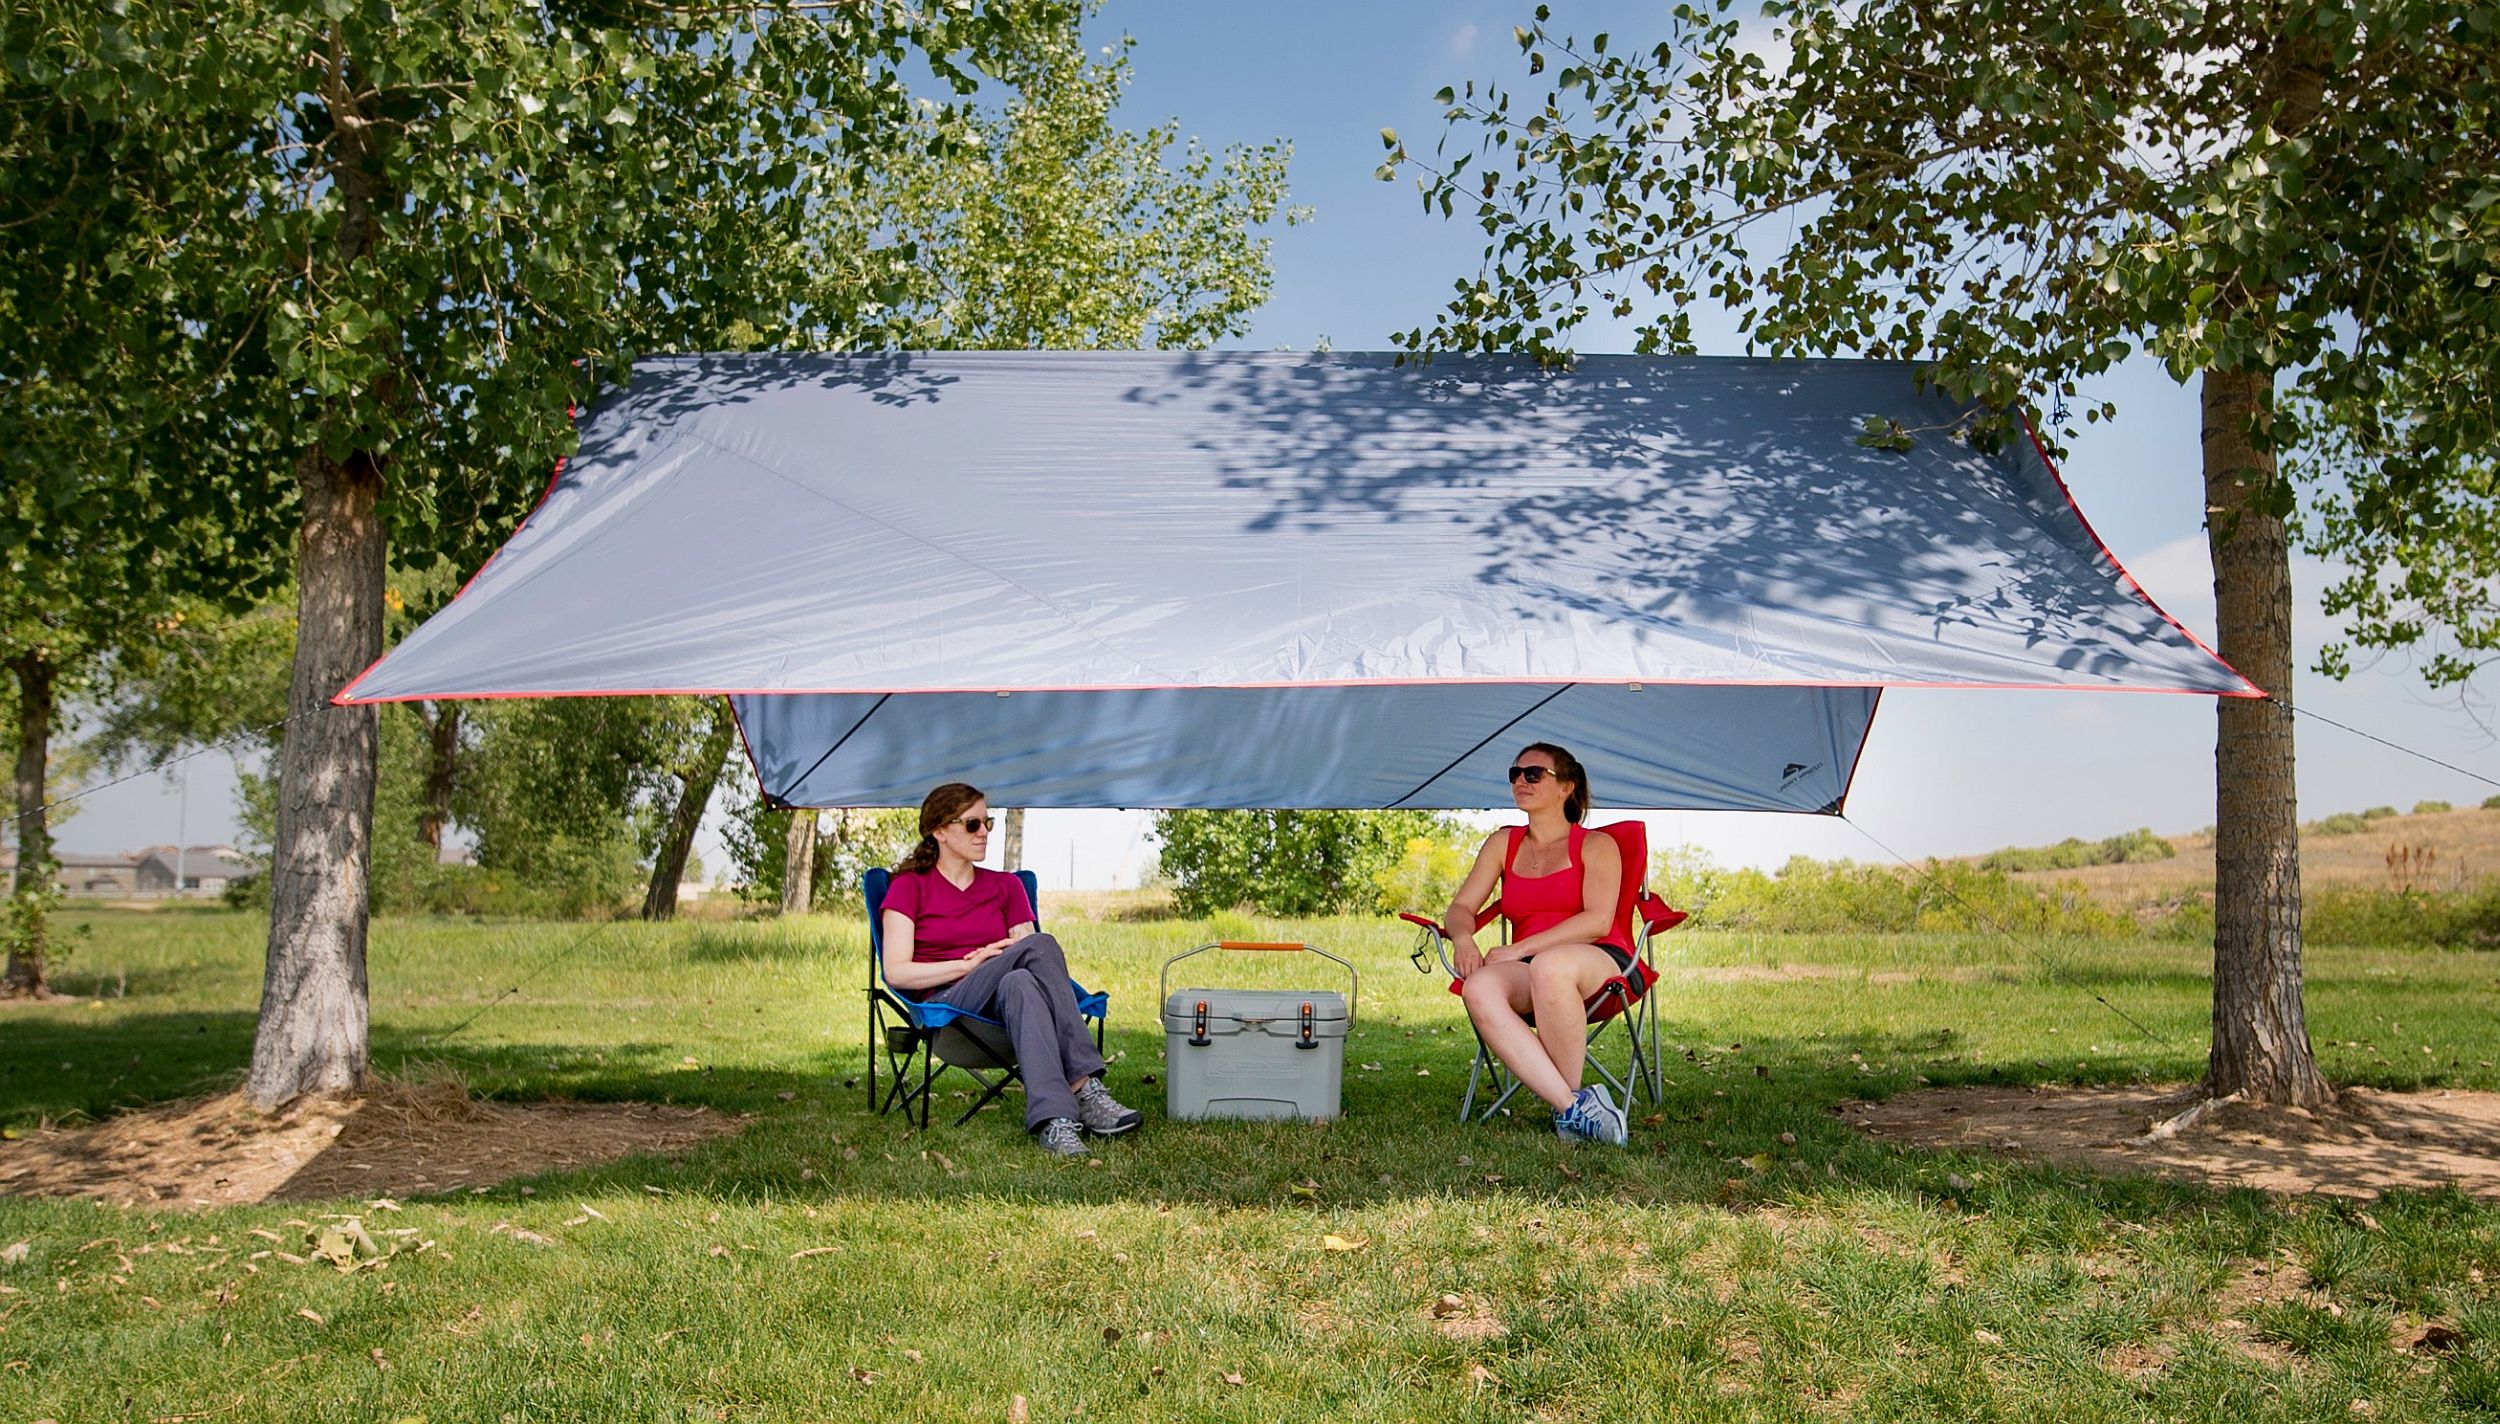 Ozark Trail Multi-Purpose Tarp Shelter, 12' x 12' with Steel Poles - image 4 of 10